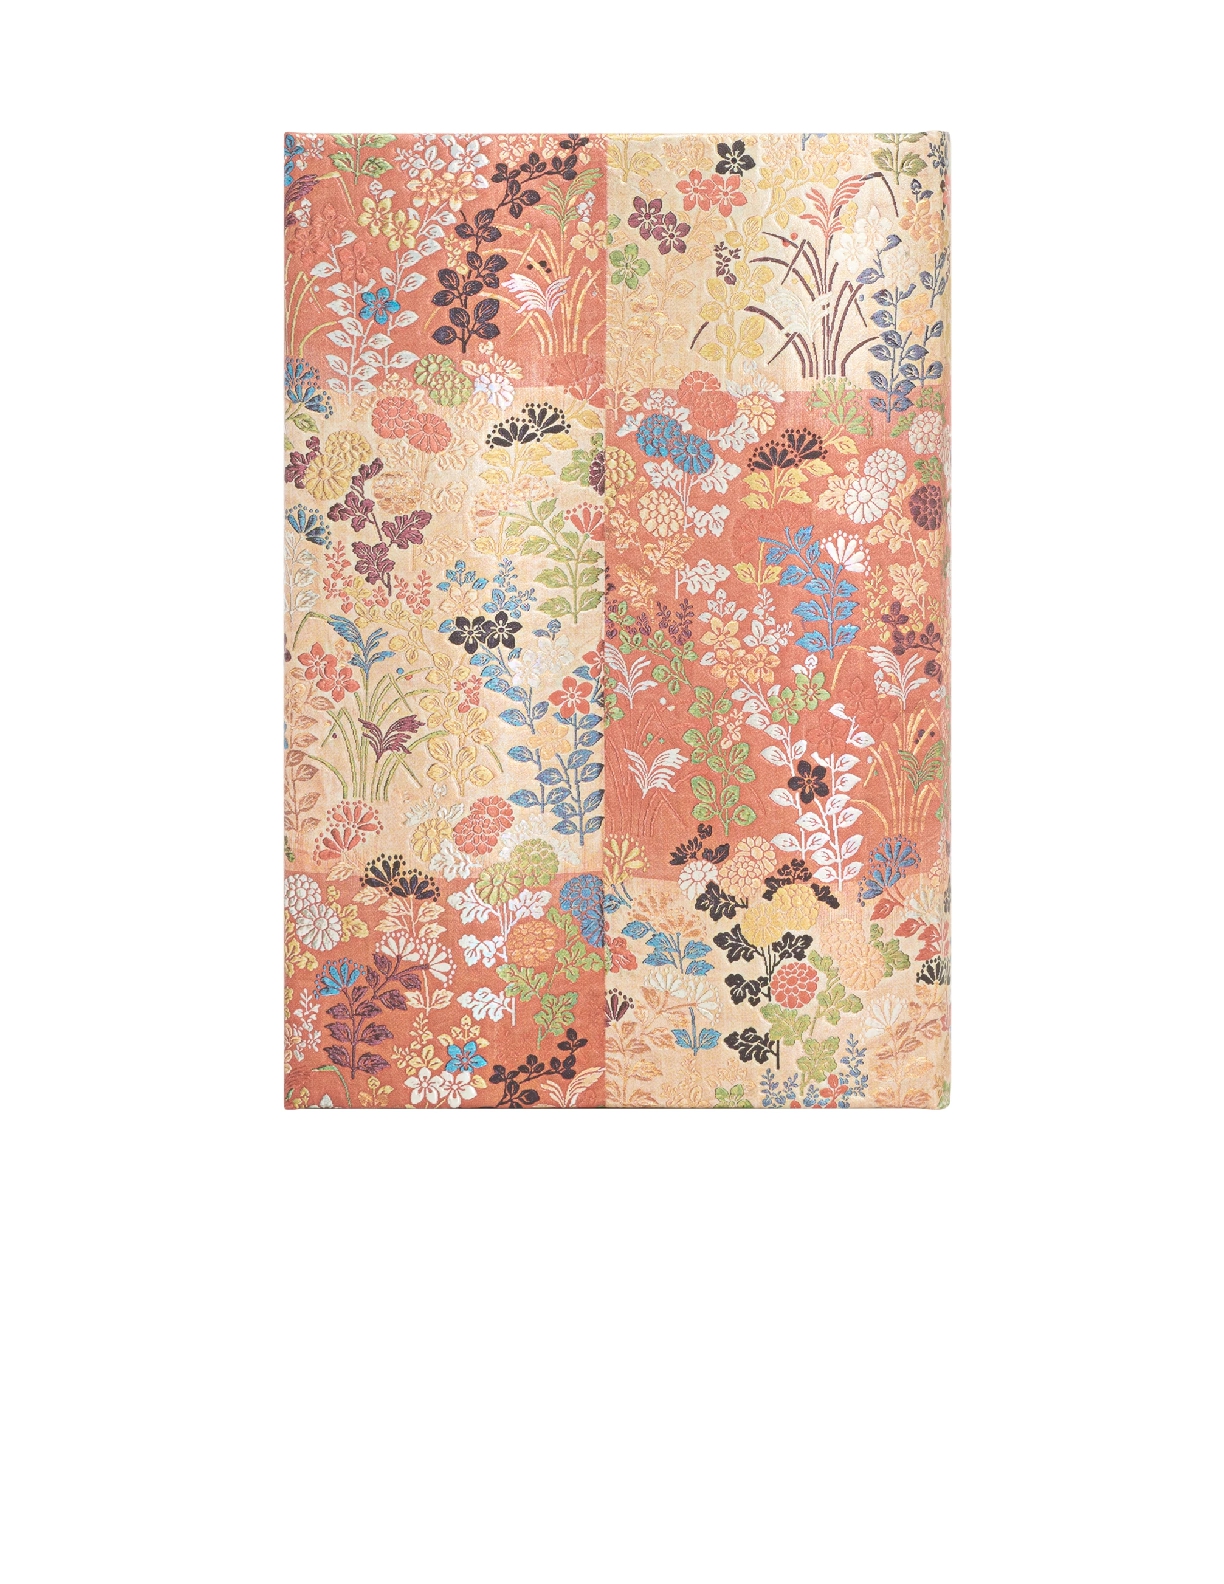 Kara-ori, Japanese Kimono, Hardcover, Mini, Lined, Wrap Closure, 176 Pg, 85 GSM